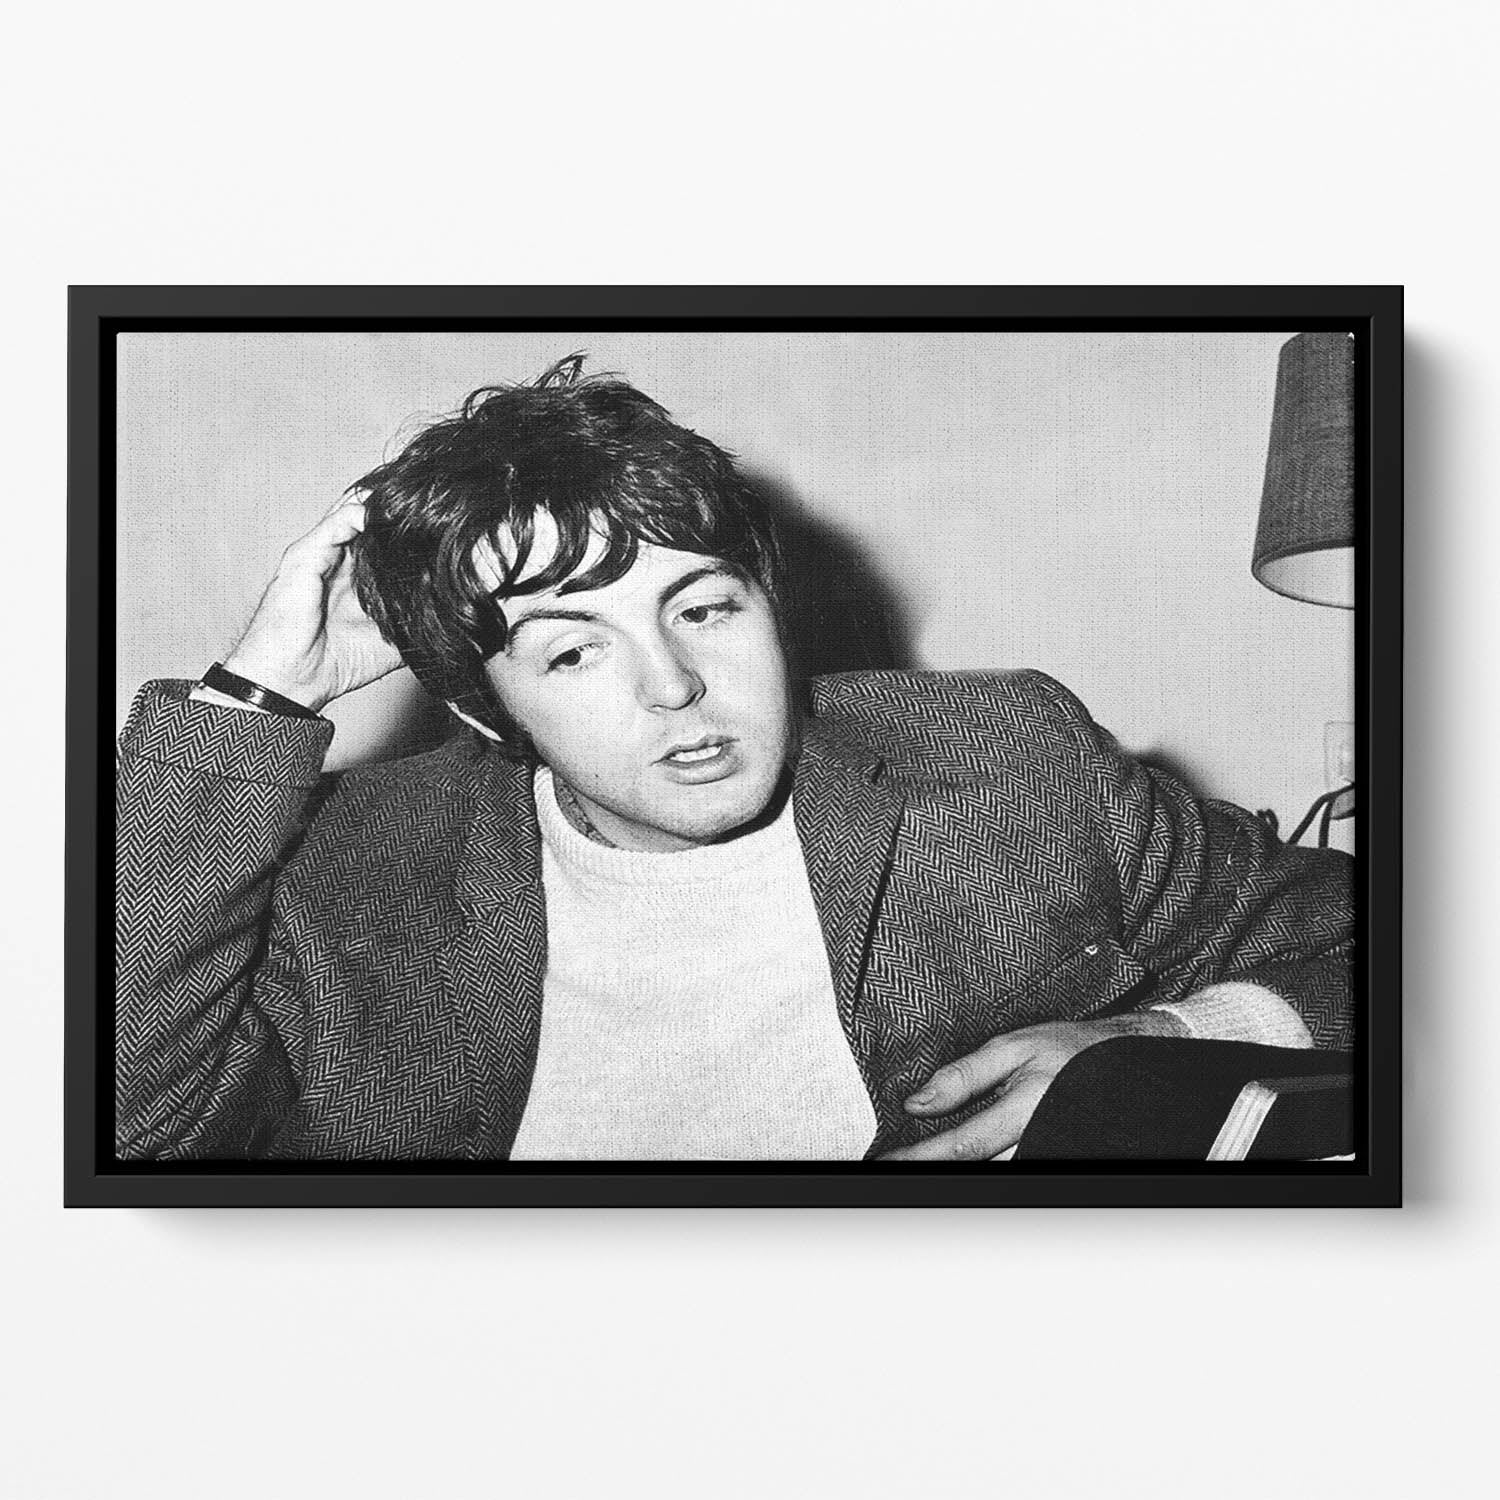 Paul McCartney being interviewed Floating Framed Canvas